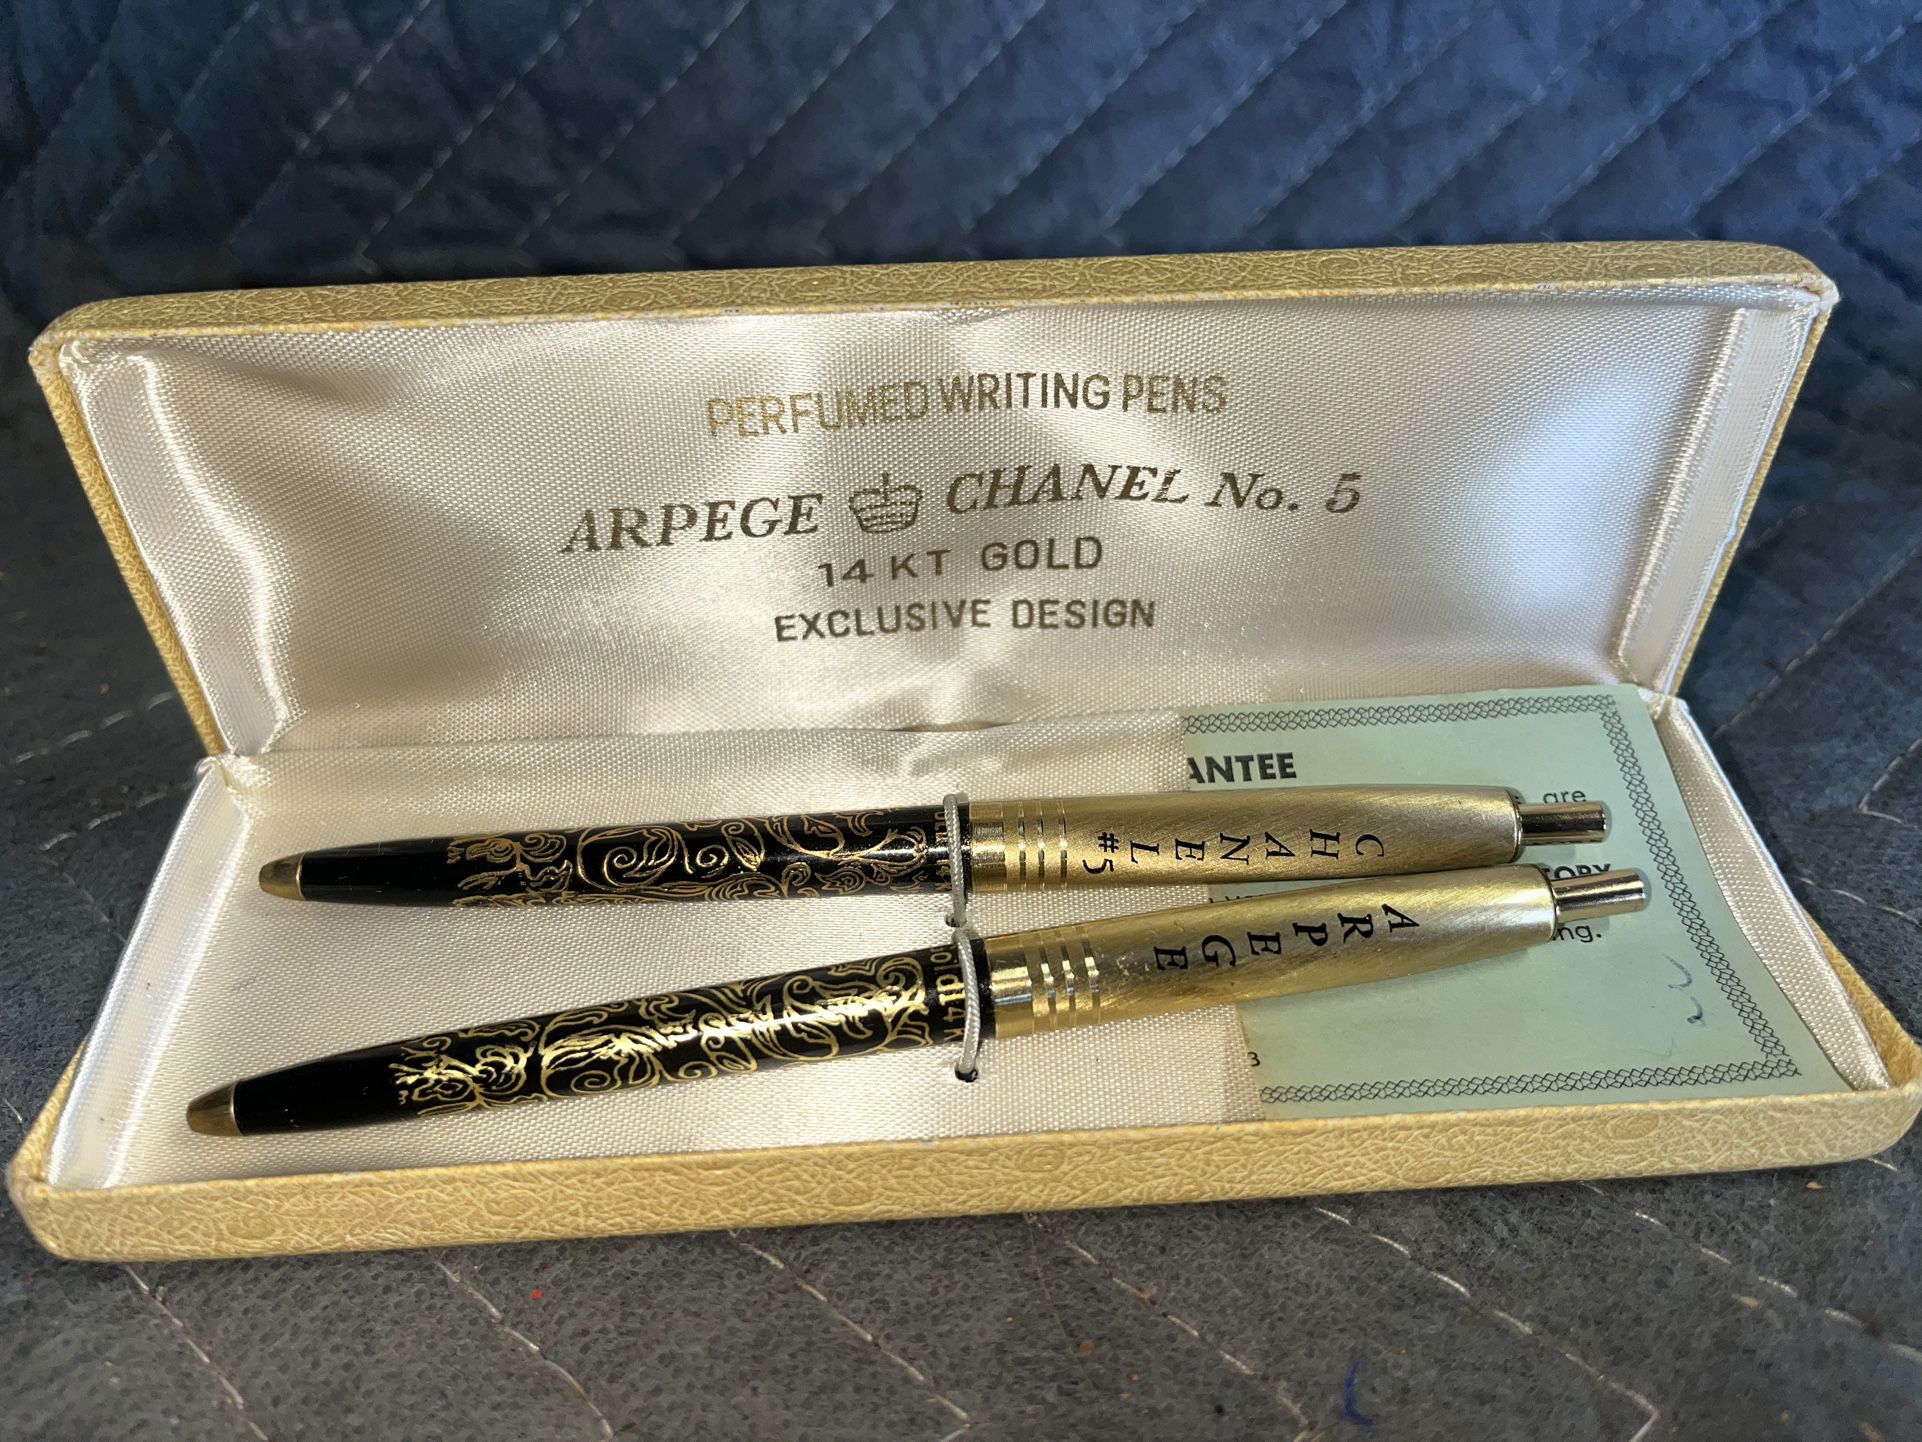 Arpege Chanel No. 5 14Kt Gold Perfumed Writing Pen